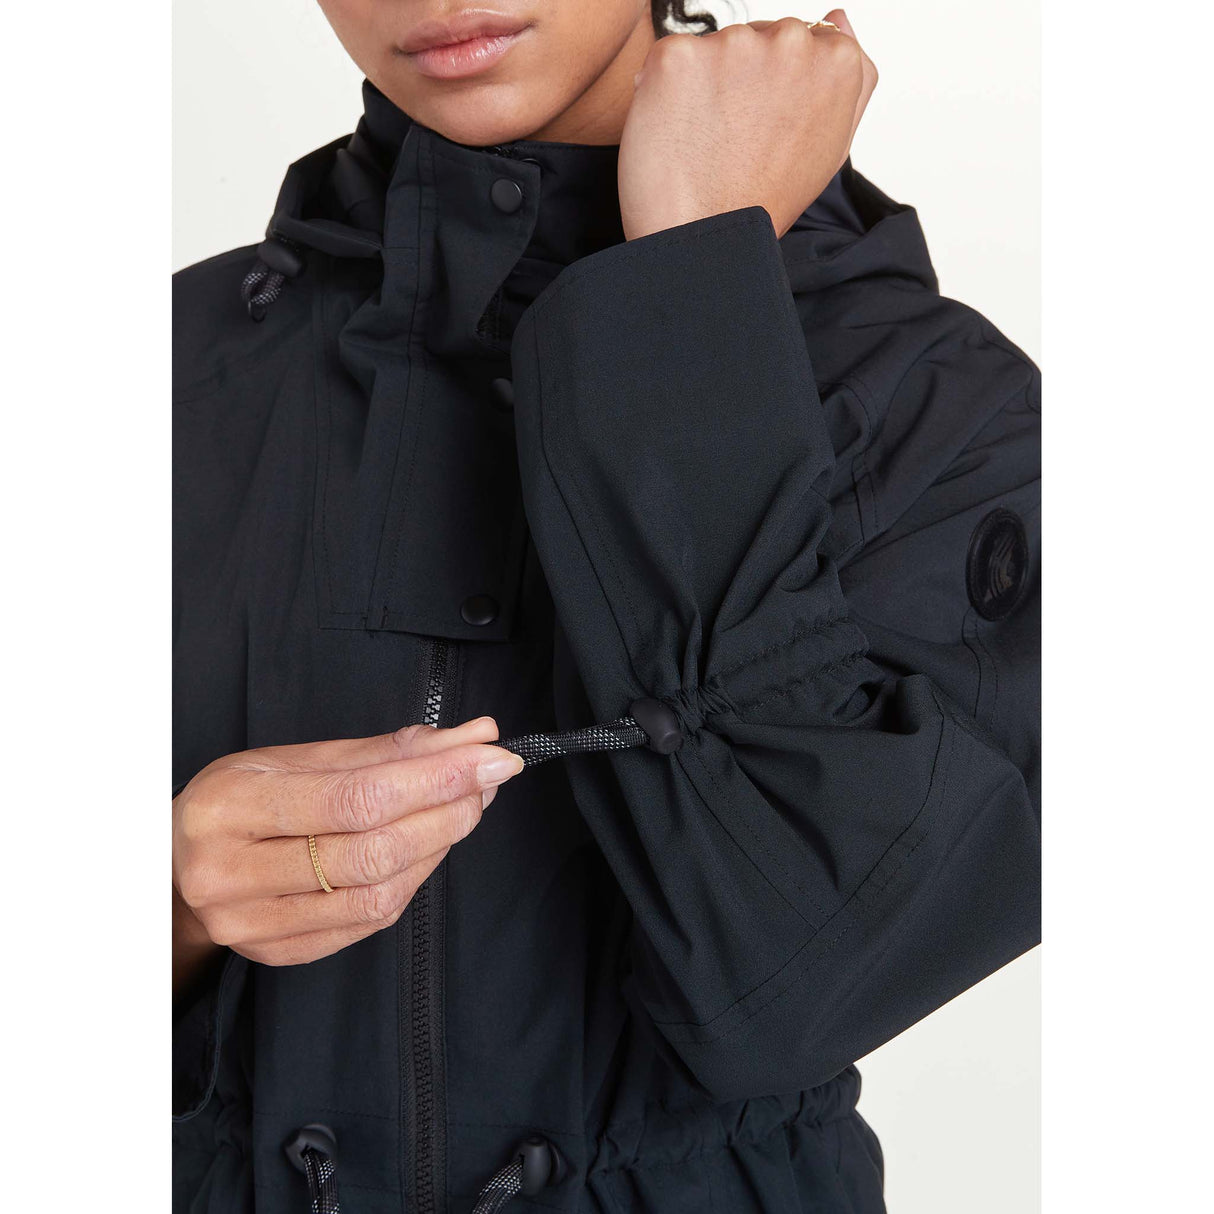 Lole Pipe jacket noir femme manches